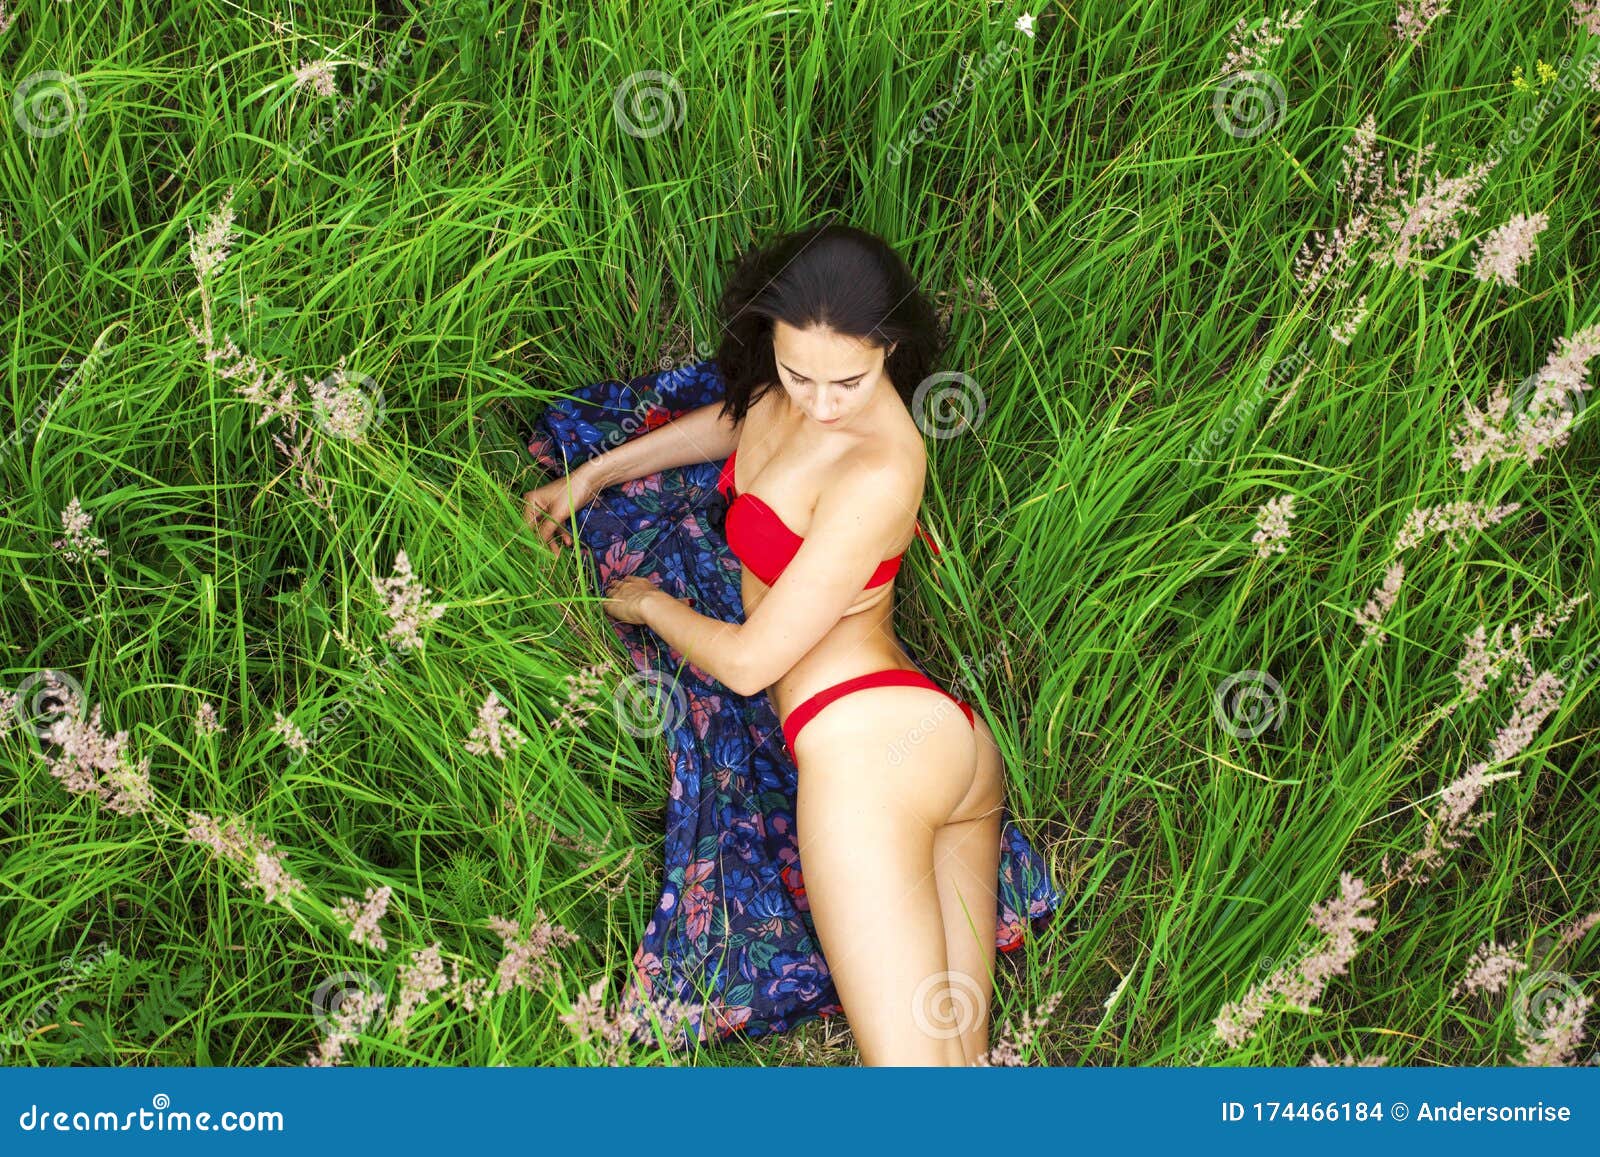 Erotic woman in grass